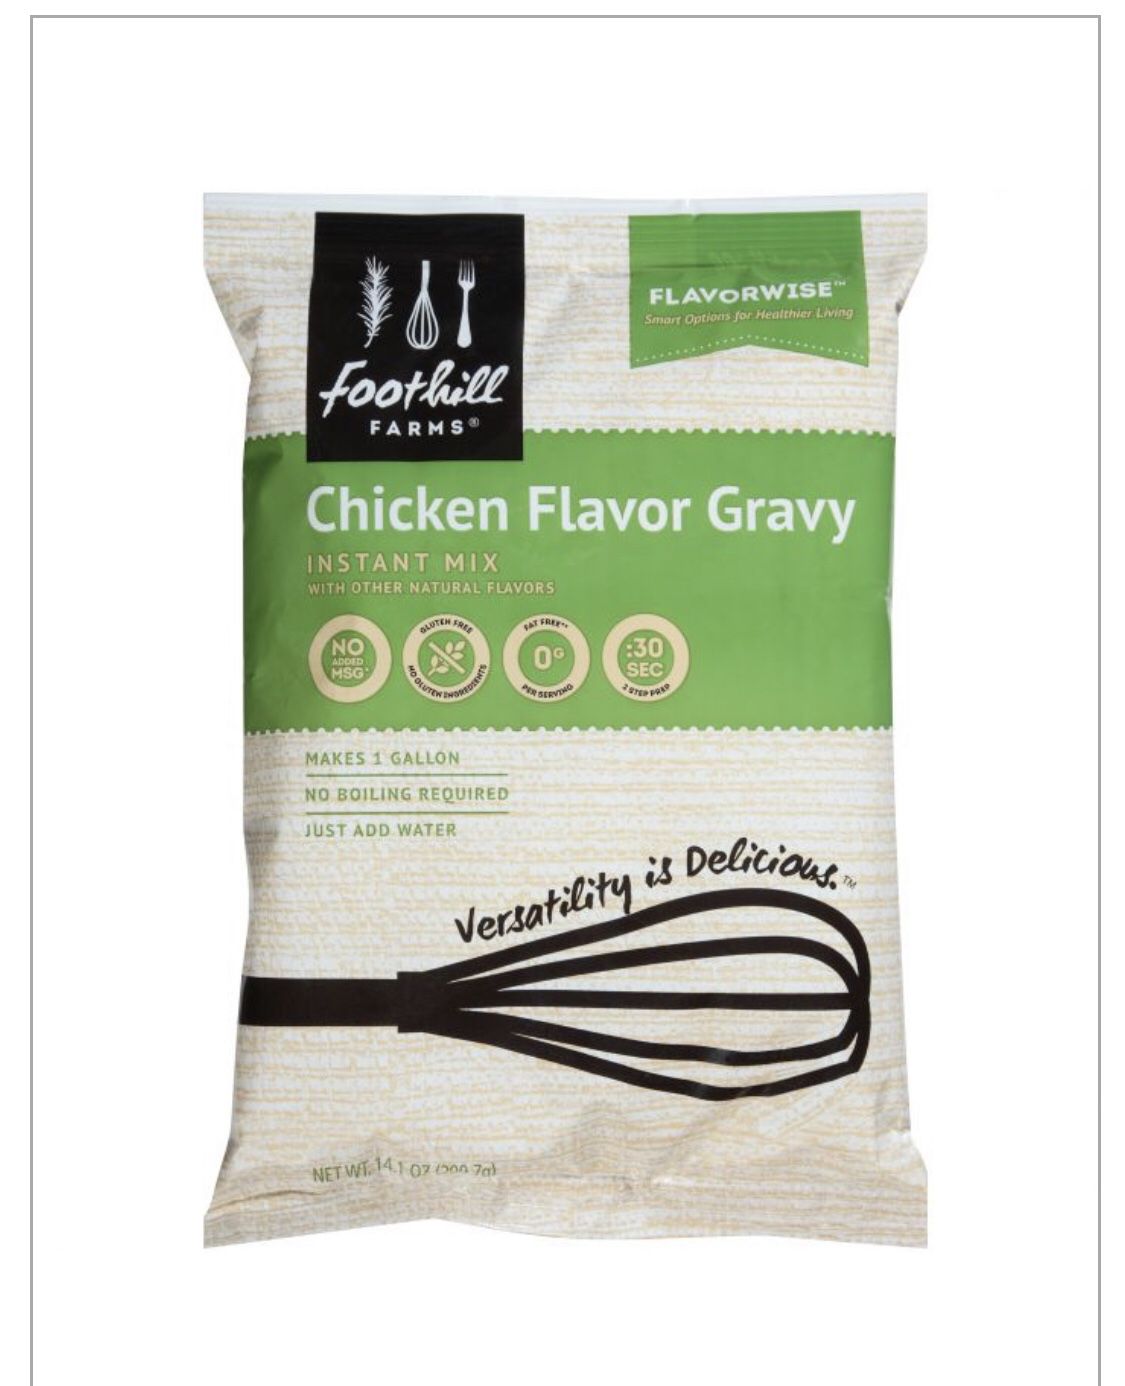 Foothills farm Chicken Flavors Gravy 8 Pieces regular prices 49.99$ special offer 29.99$